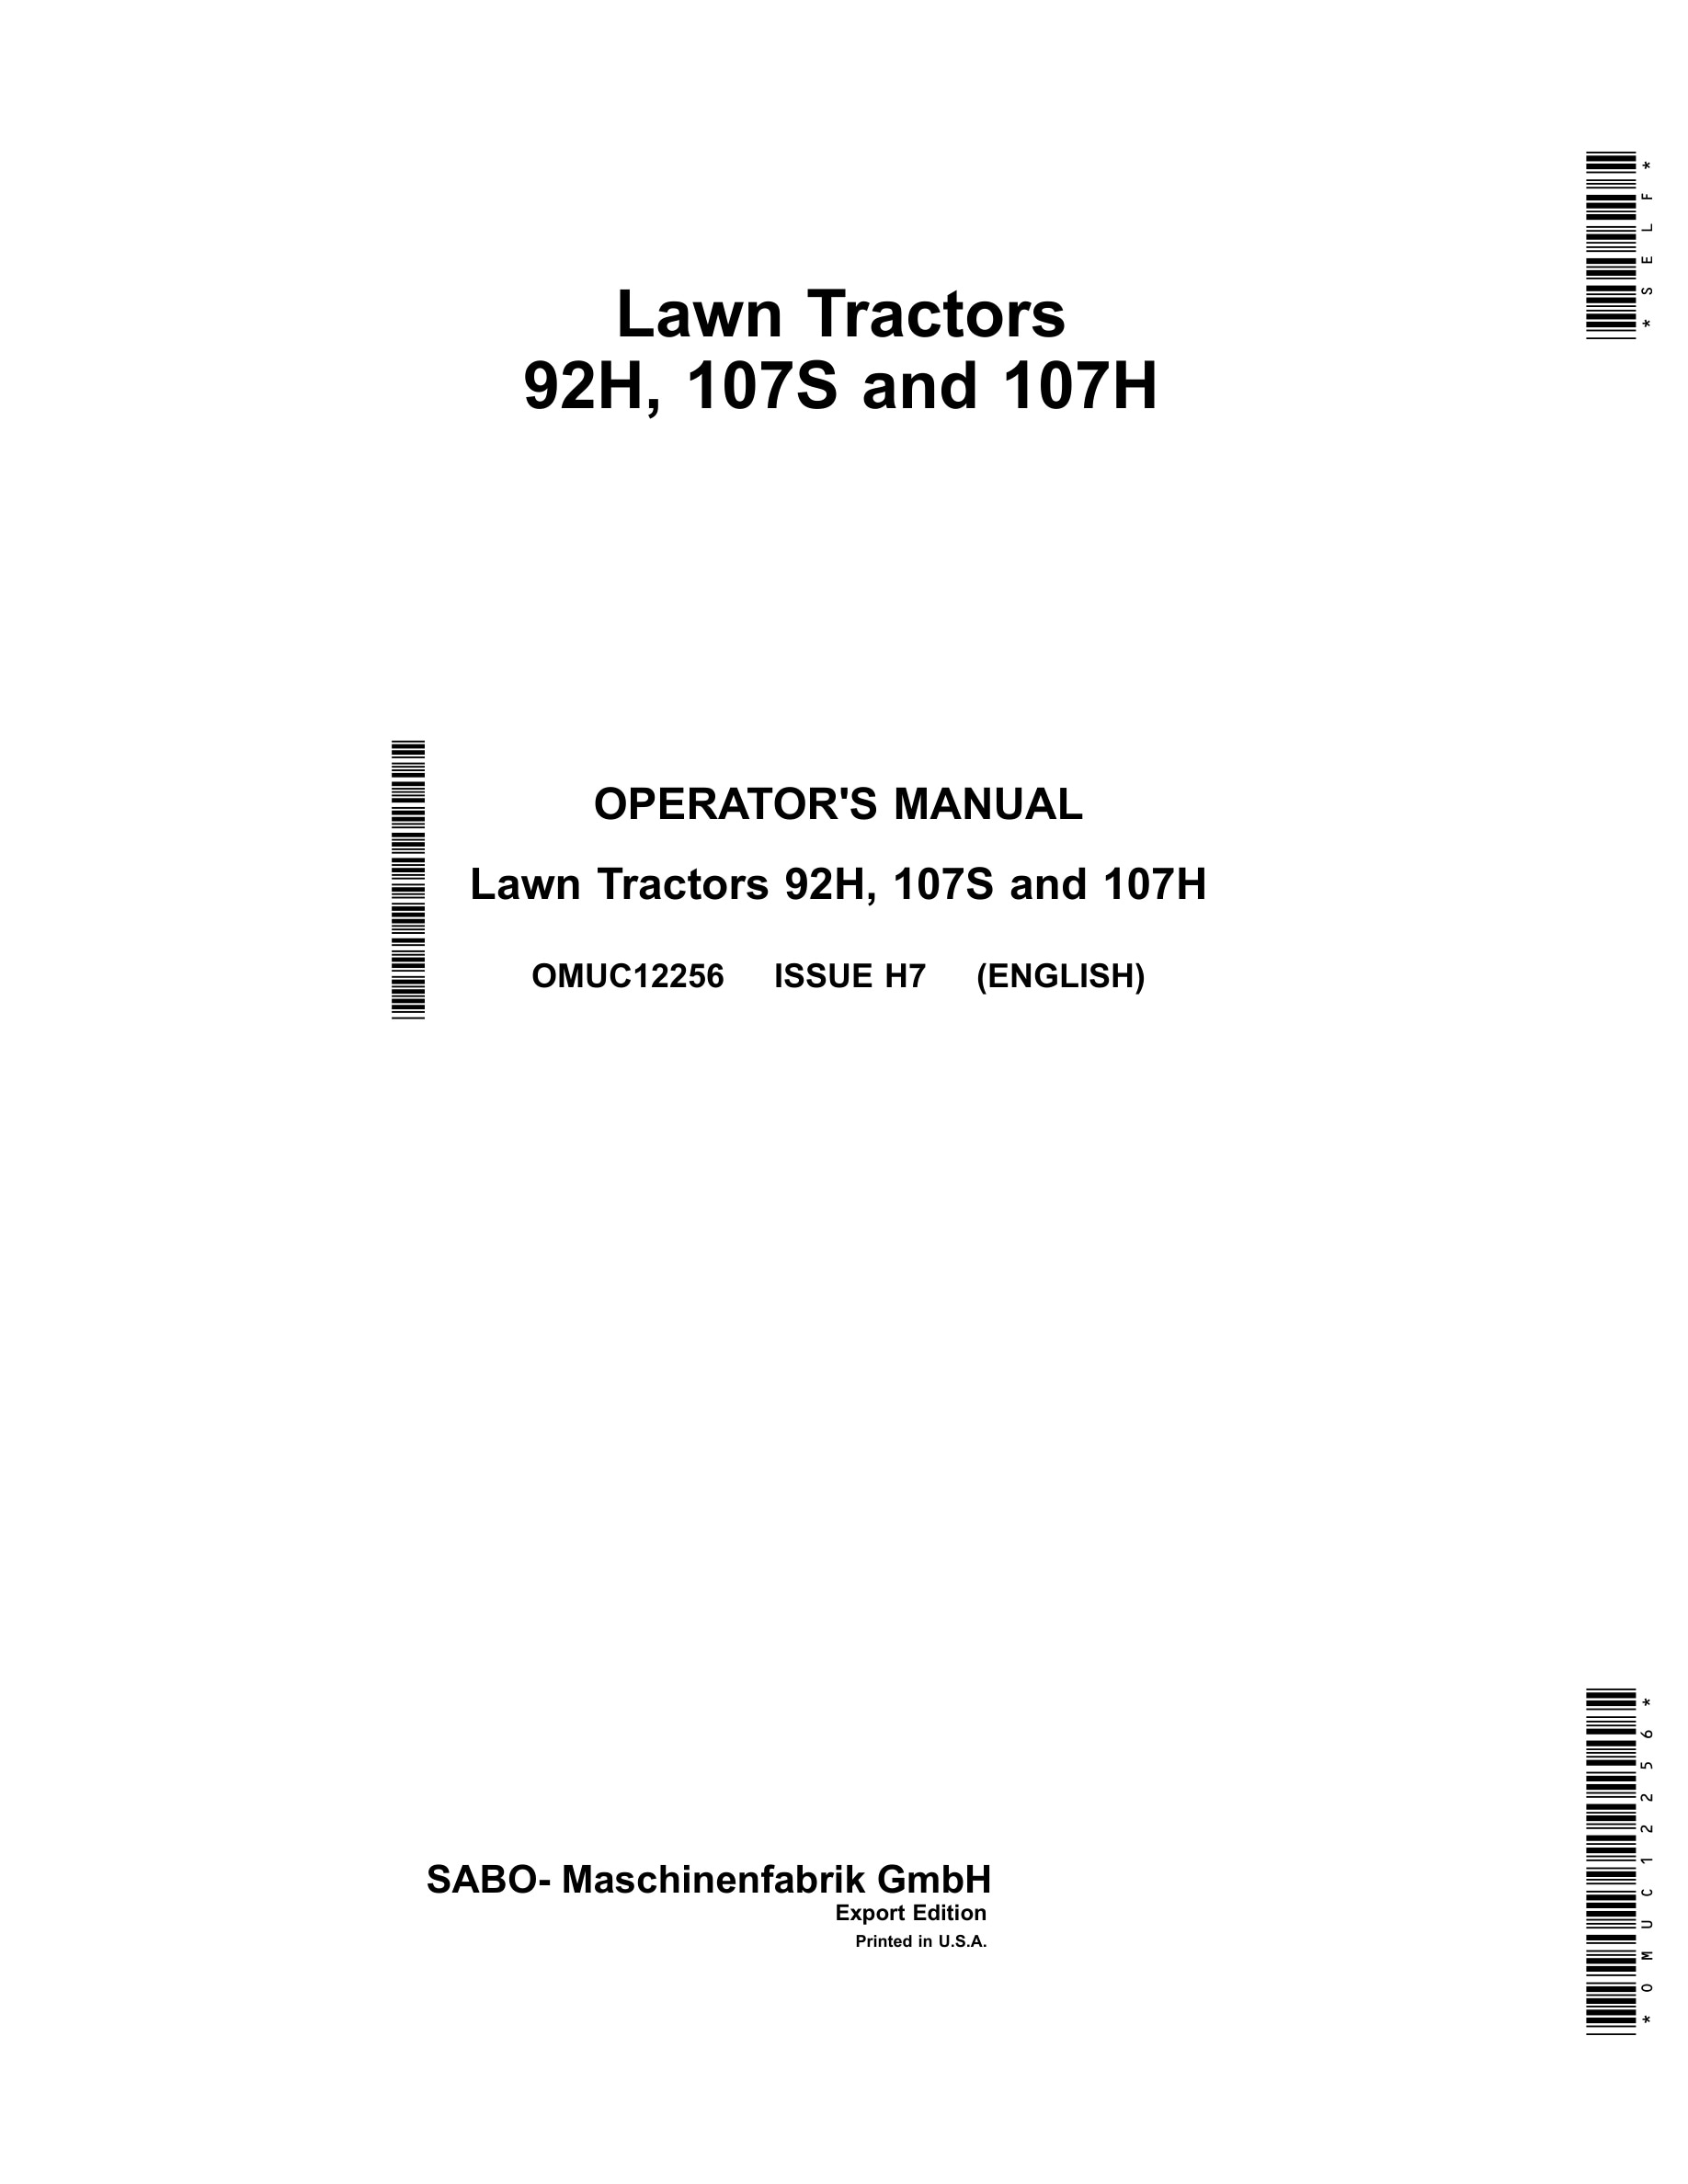 John Deere 92h, 107s And 107h Lawn Tractors Operator Manuals OMUC12256-1